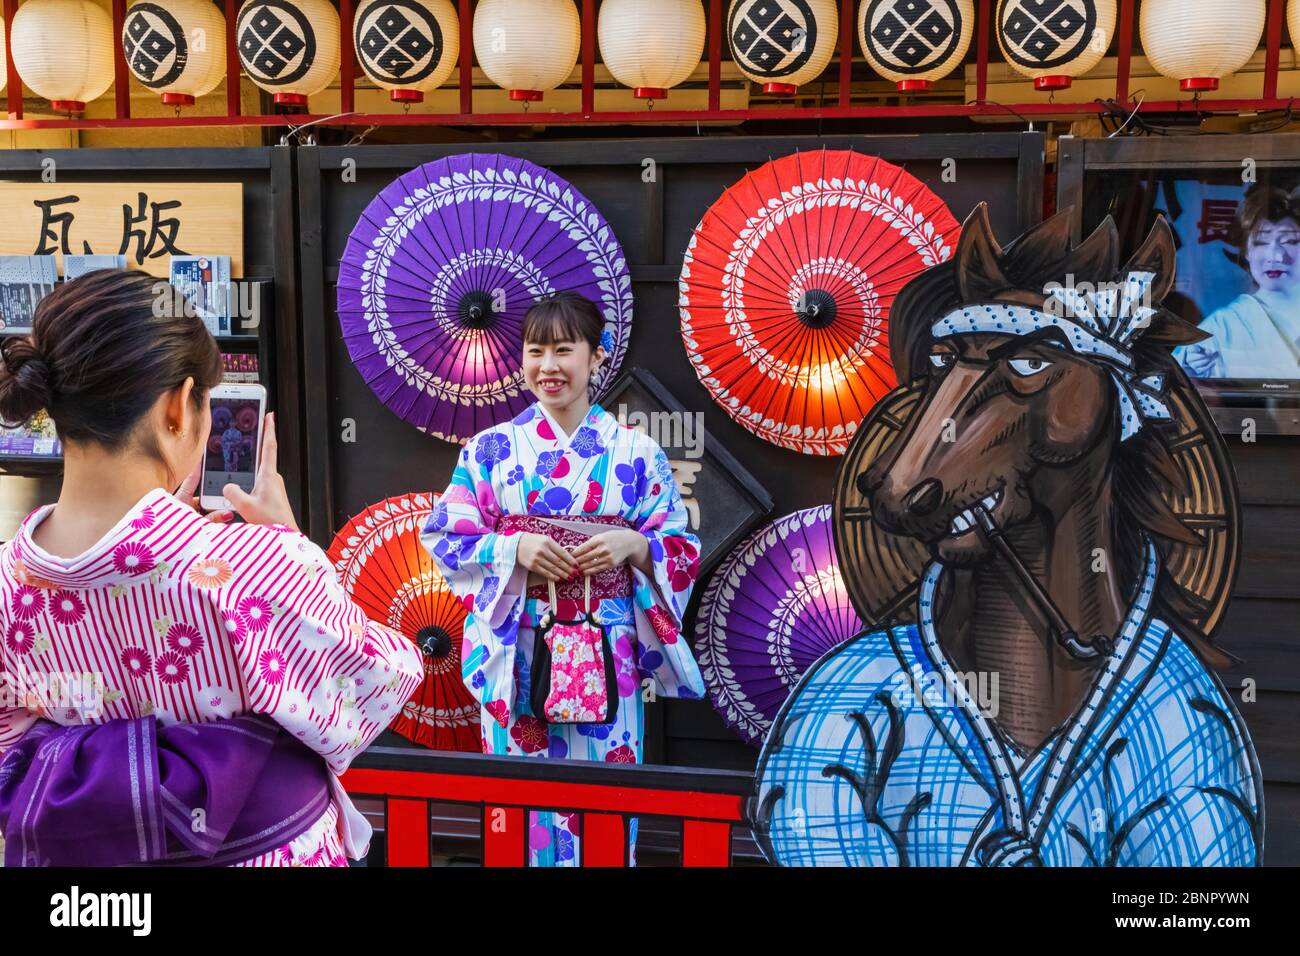 Japón, Honshu, Tokio, Asakusa, Mujeres En Kimono Tomando Souvenir Fotos Delante De Colorful Paper Paraguas Foto de stock